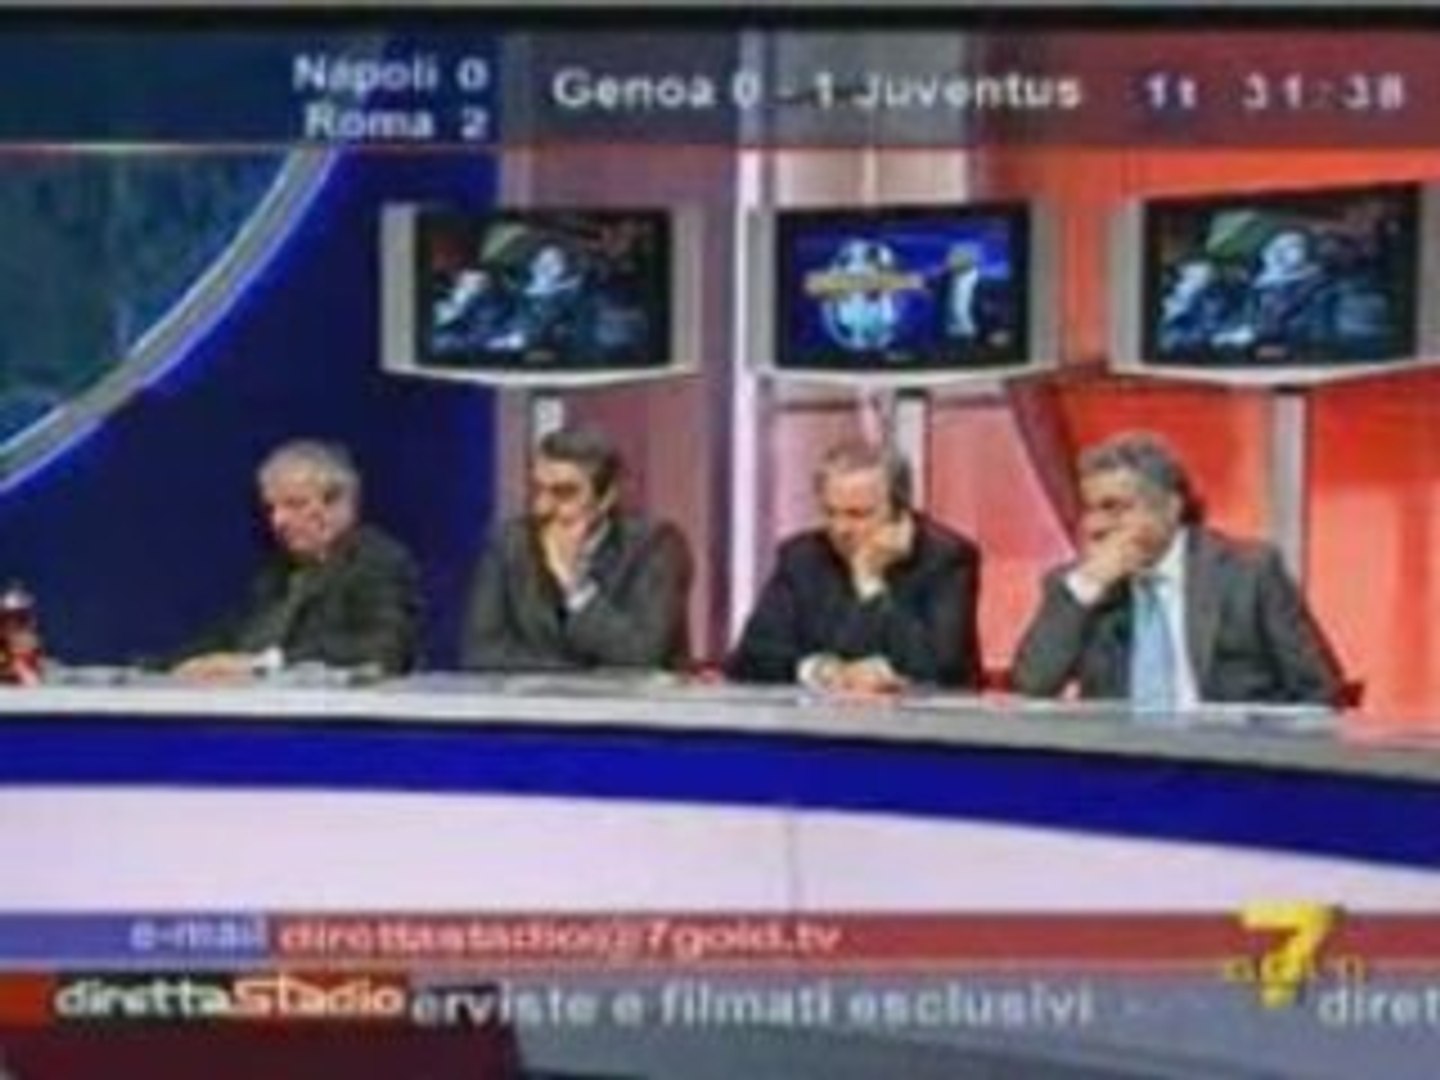 Genoa-Juventus 0-2 (Claudio Zuliani a Diretta Stadio) - Video Dailymotion